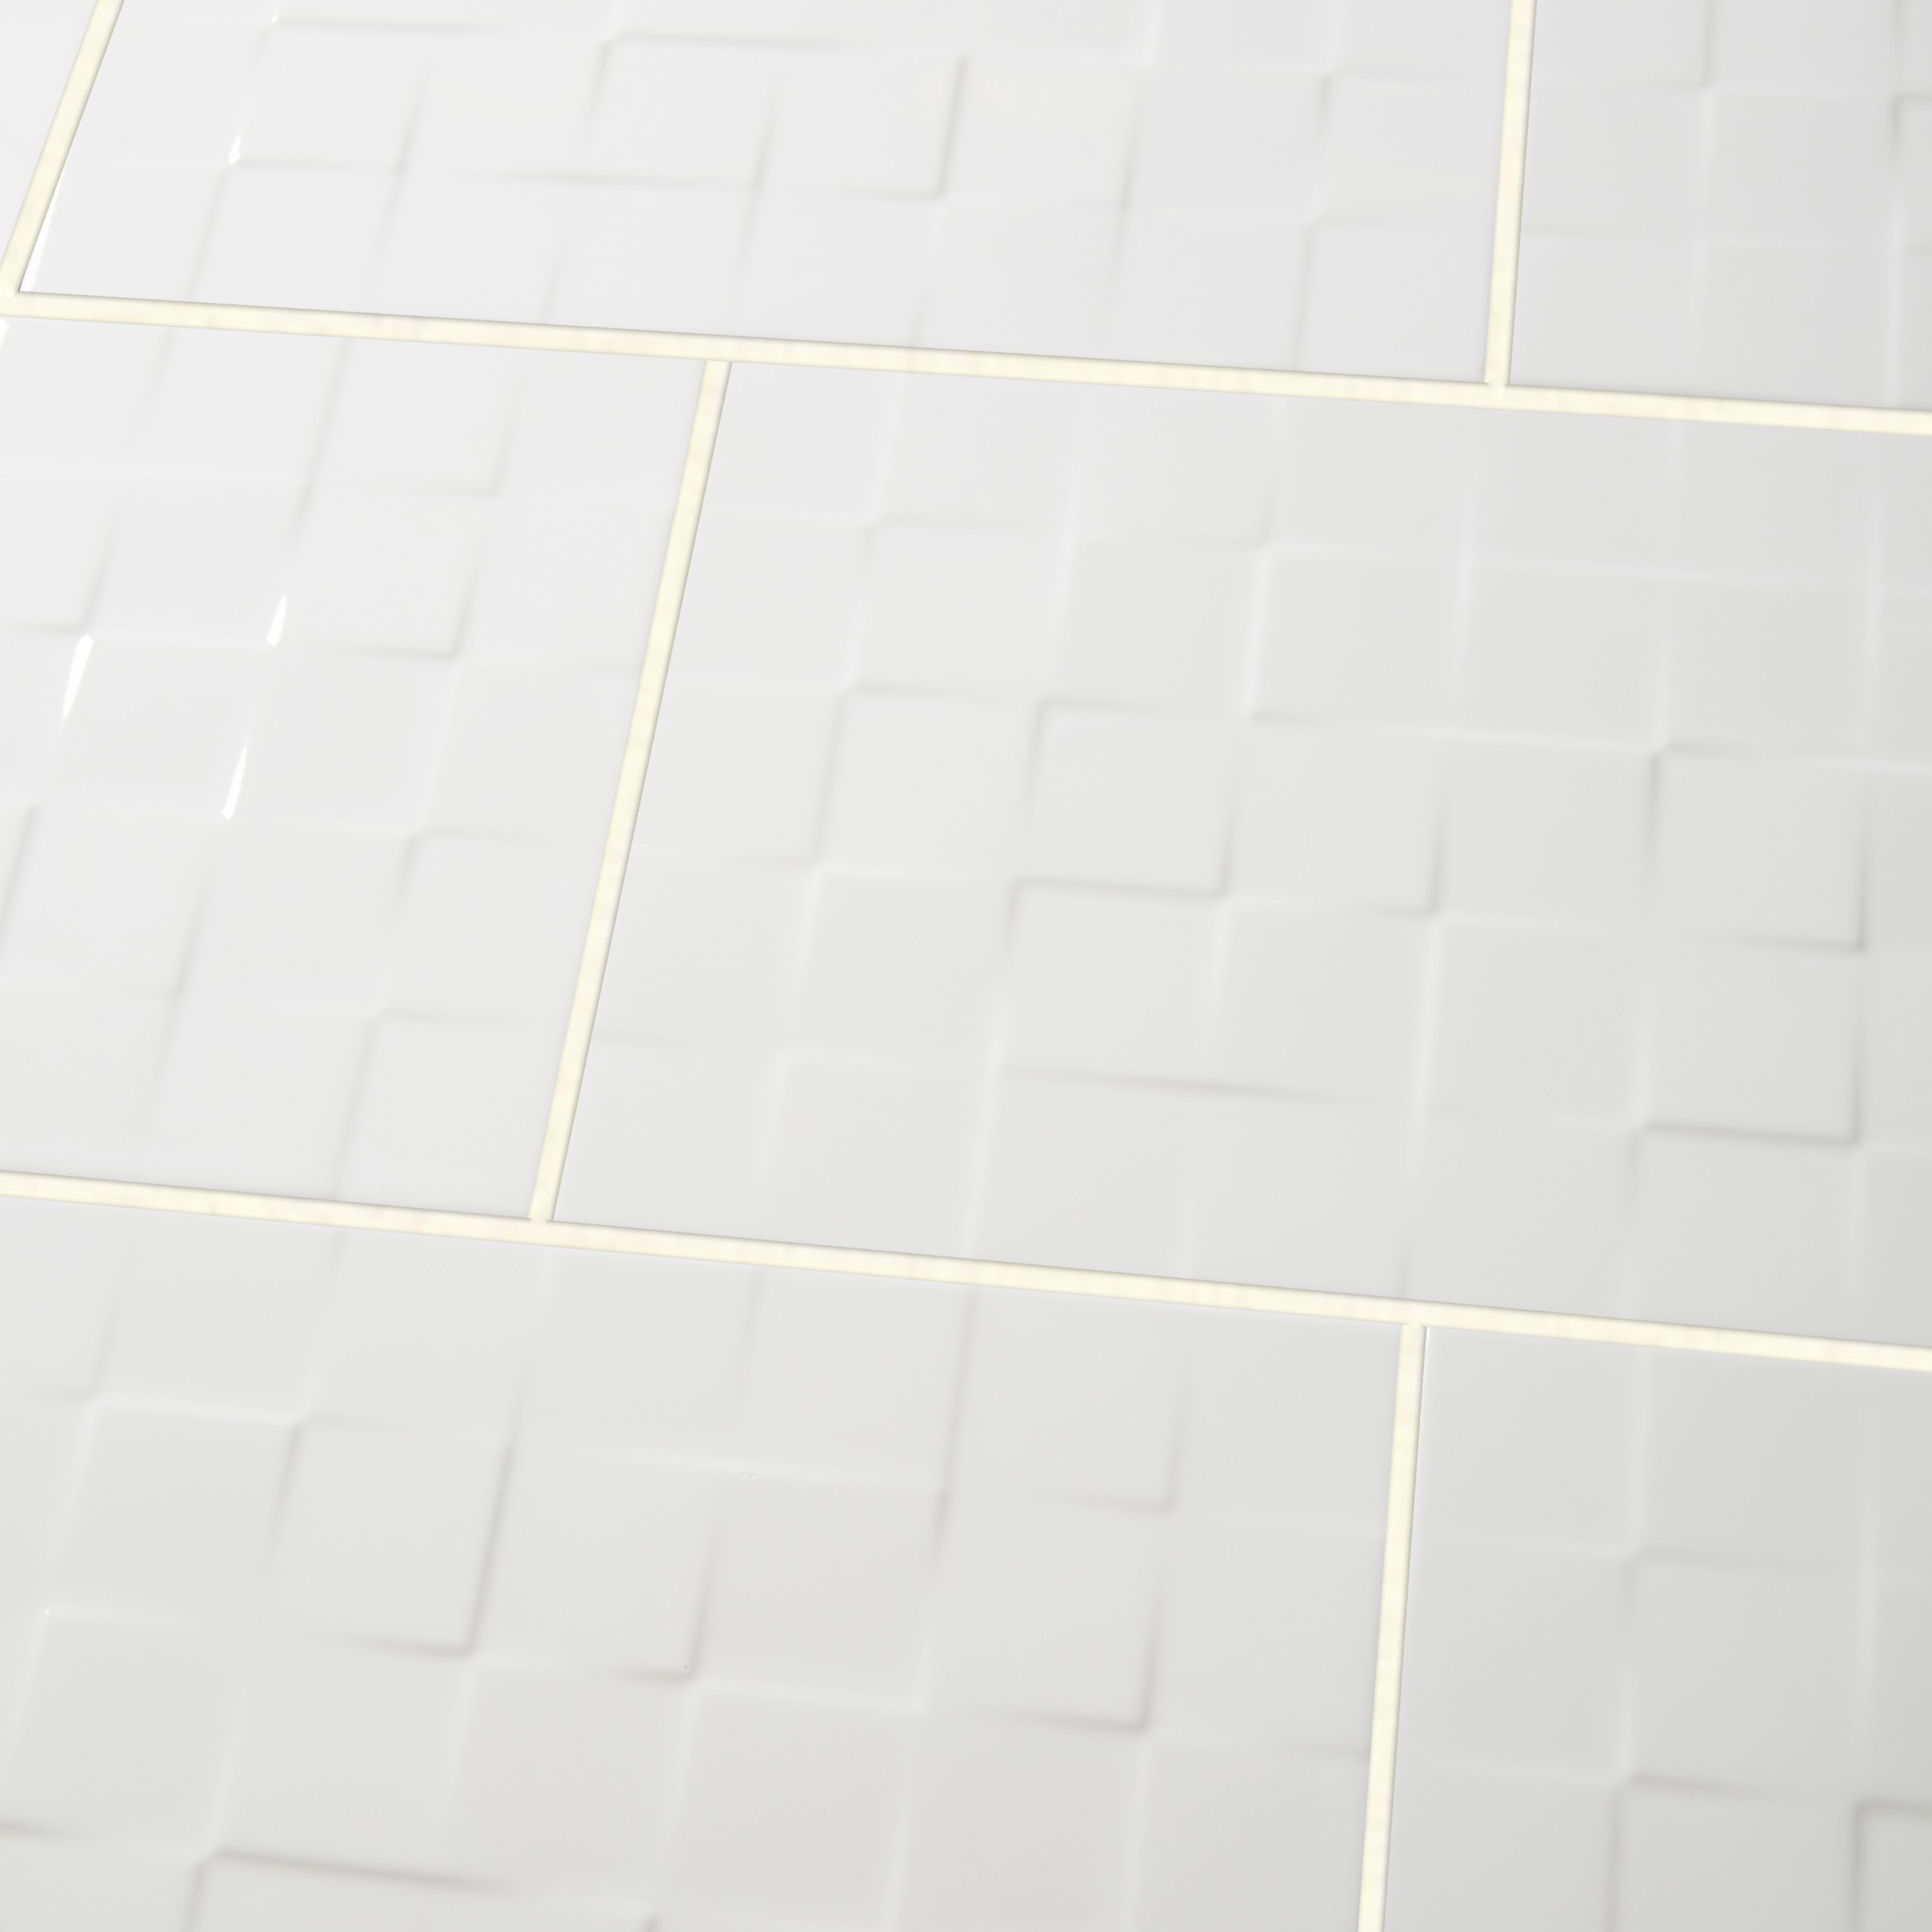 Alexandrina White Gloss Flat Ceramic Wall Tile, Pack of 10, (L)402.4mm (W)251.6mm